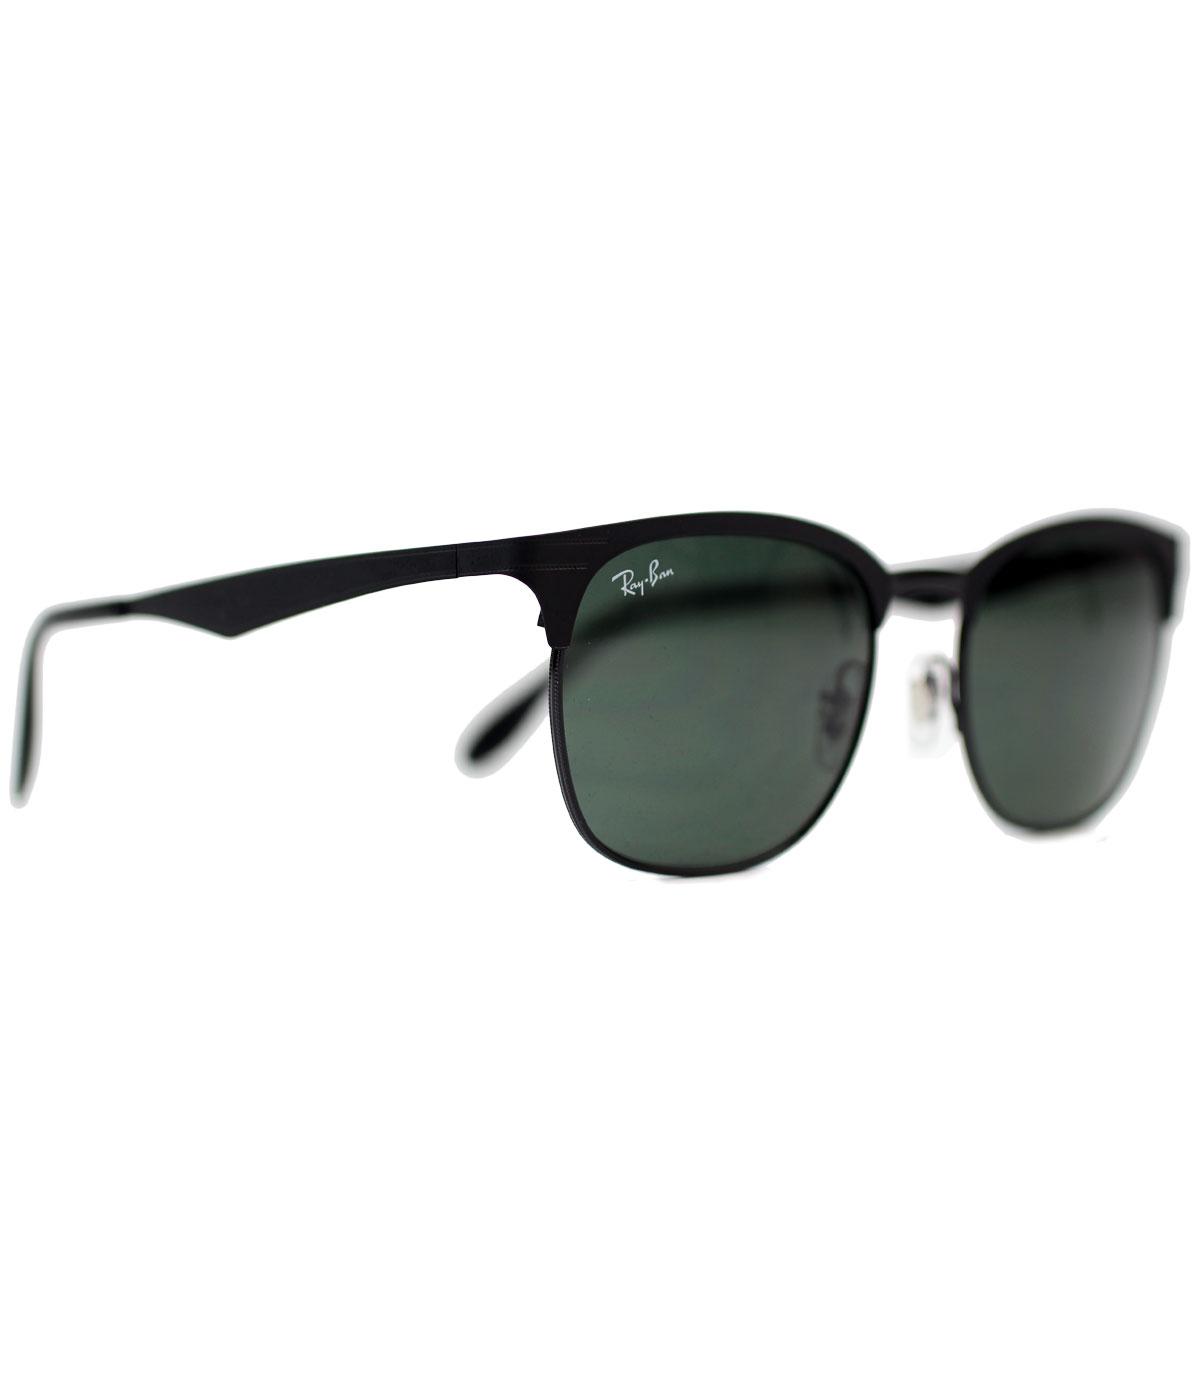 Ray Ban Clubmaster Retro 50s Mod Thin Frame Sunglasses Black